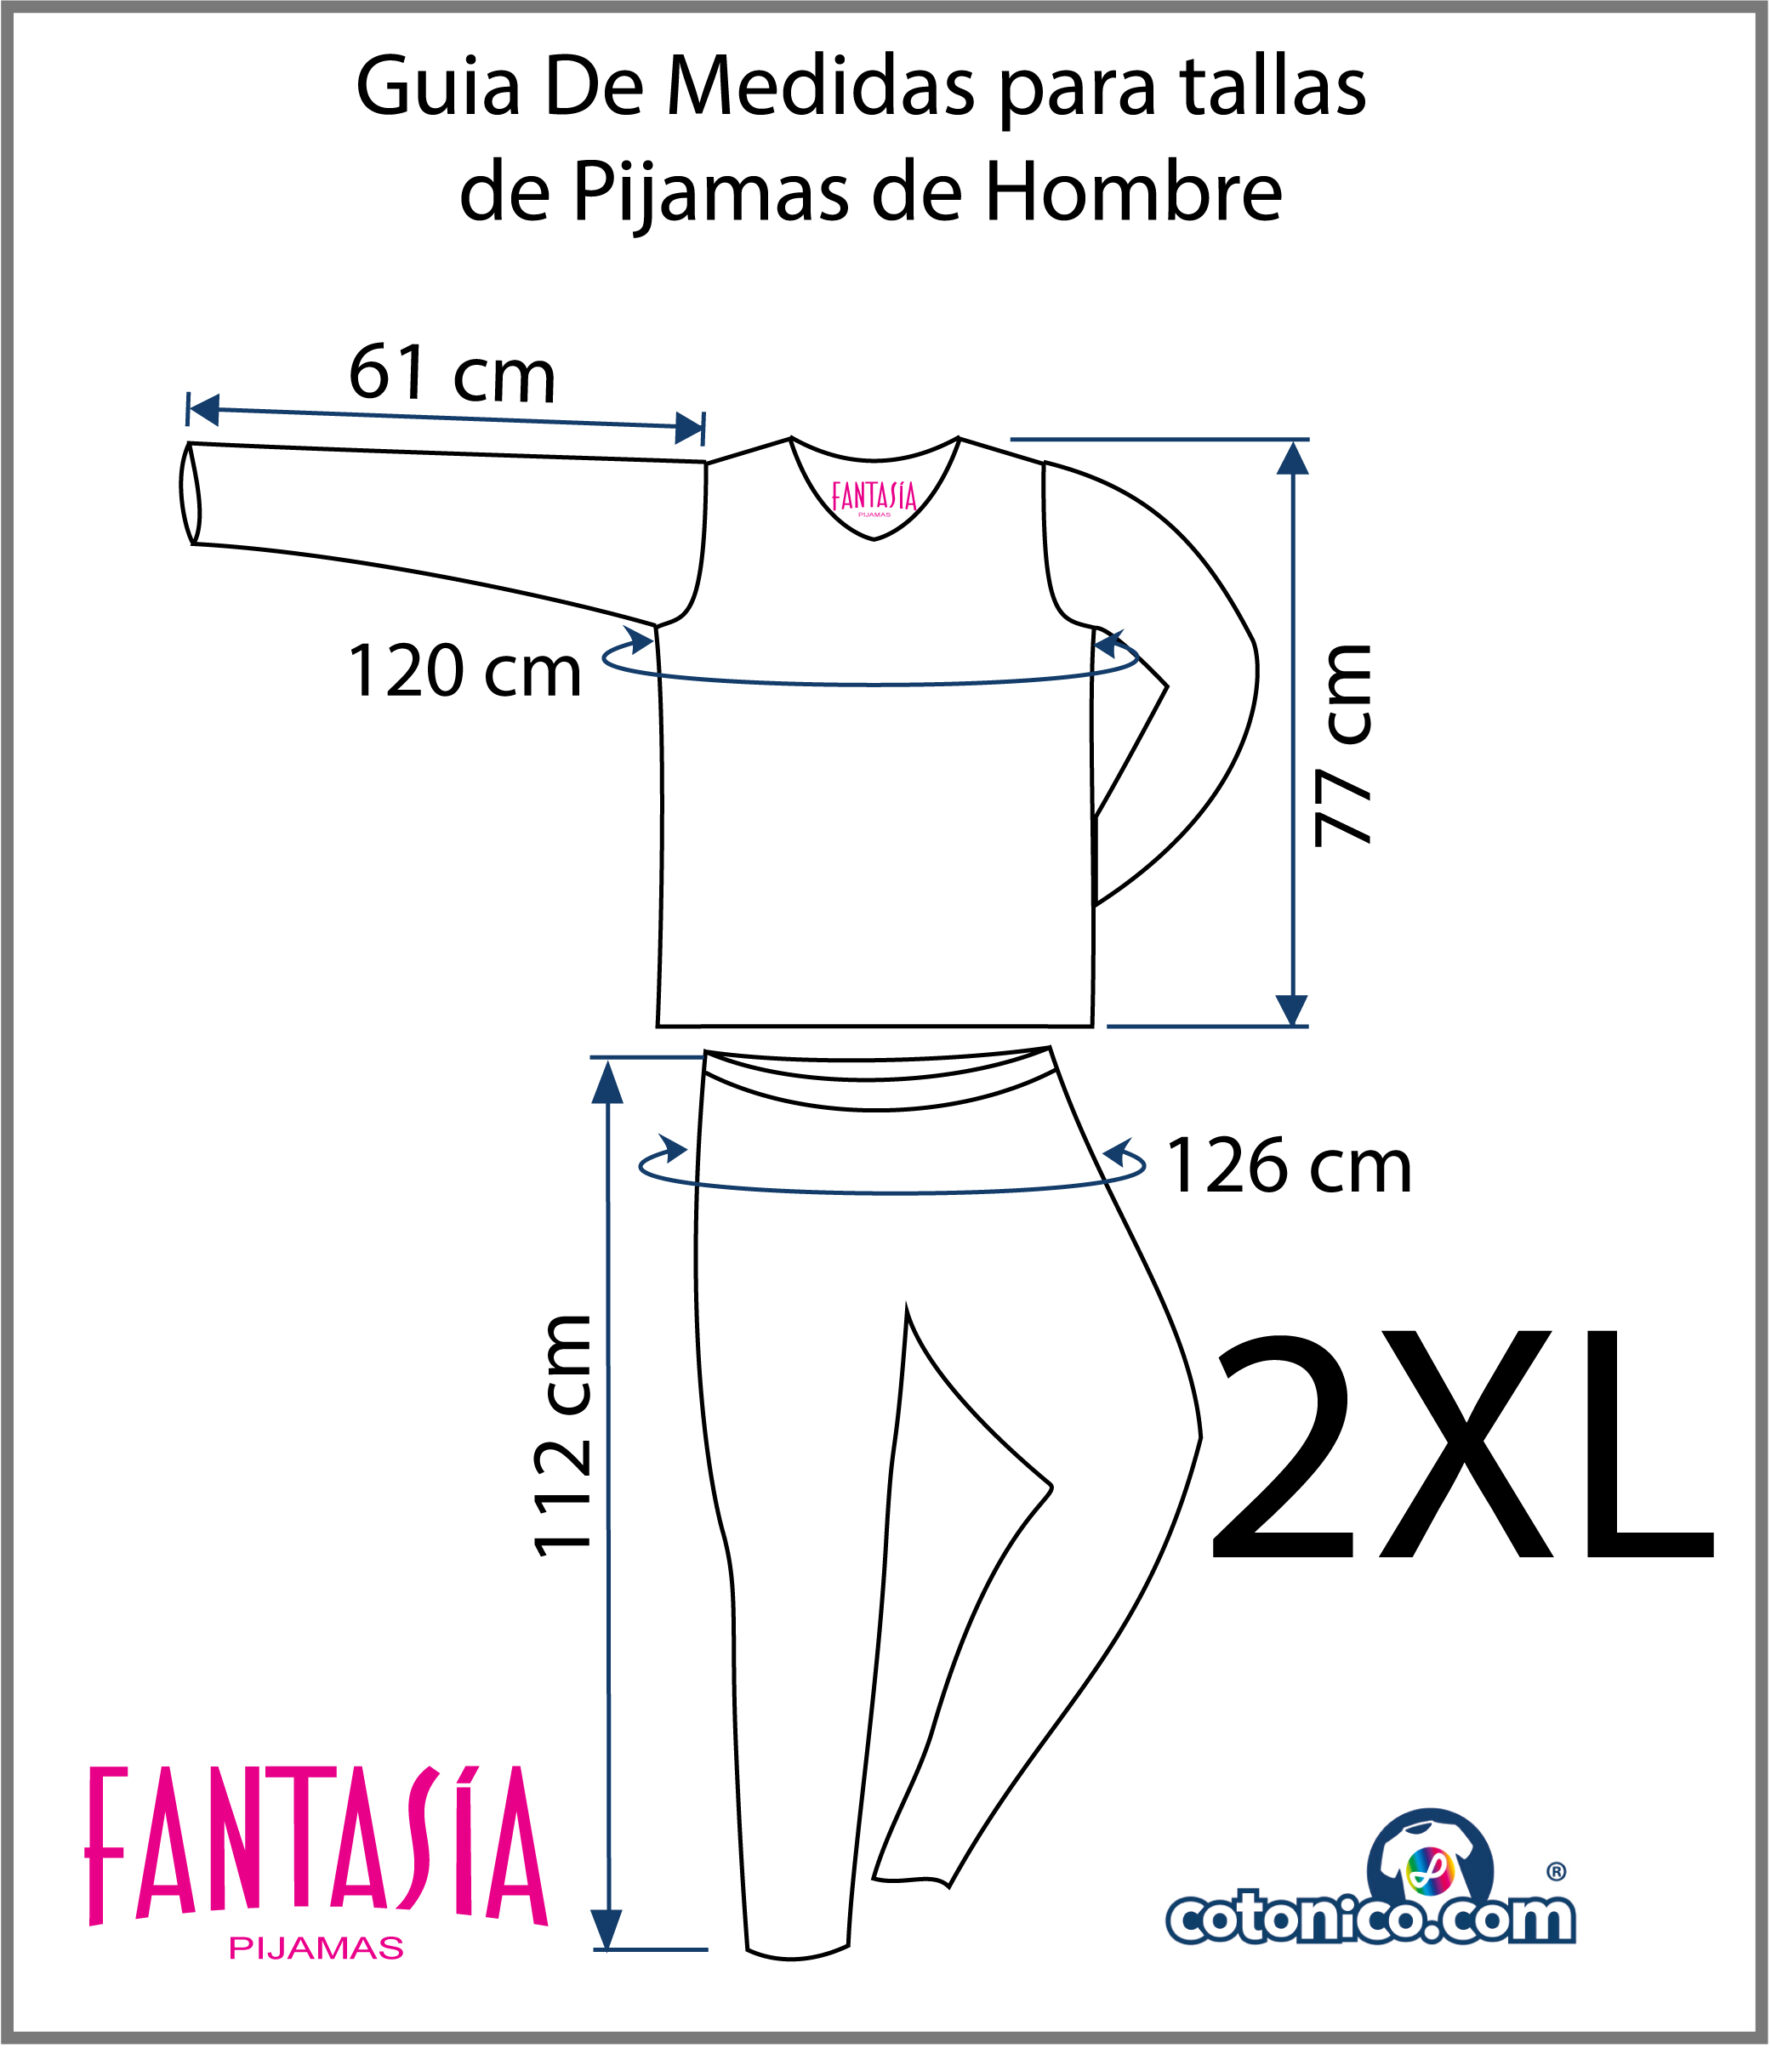 Guia-De-Tallas-Pijamas-De-Hombre-2XL